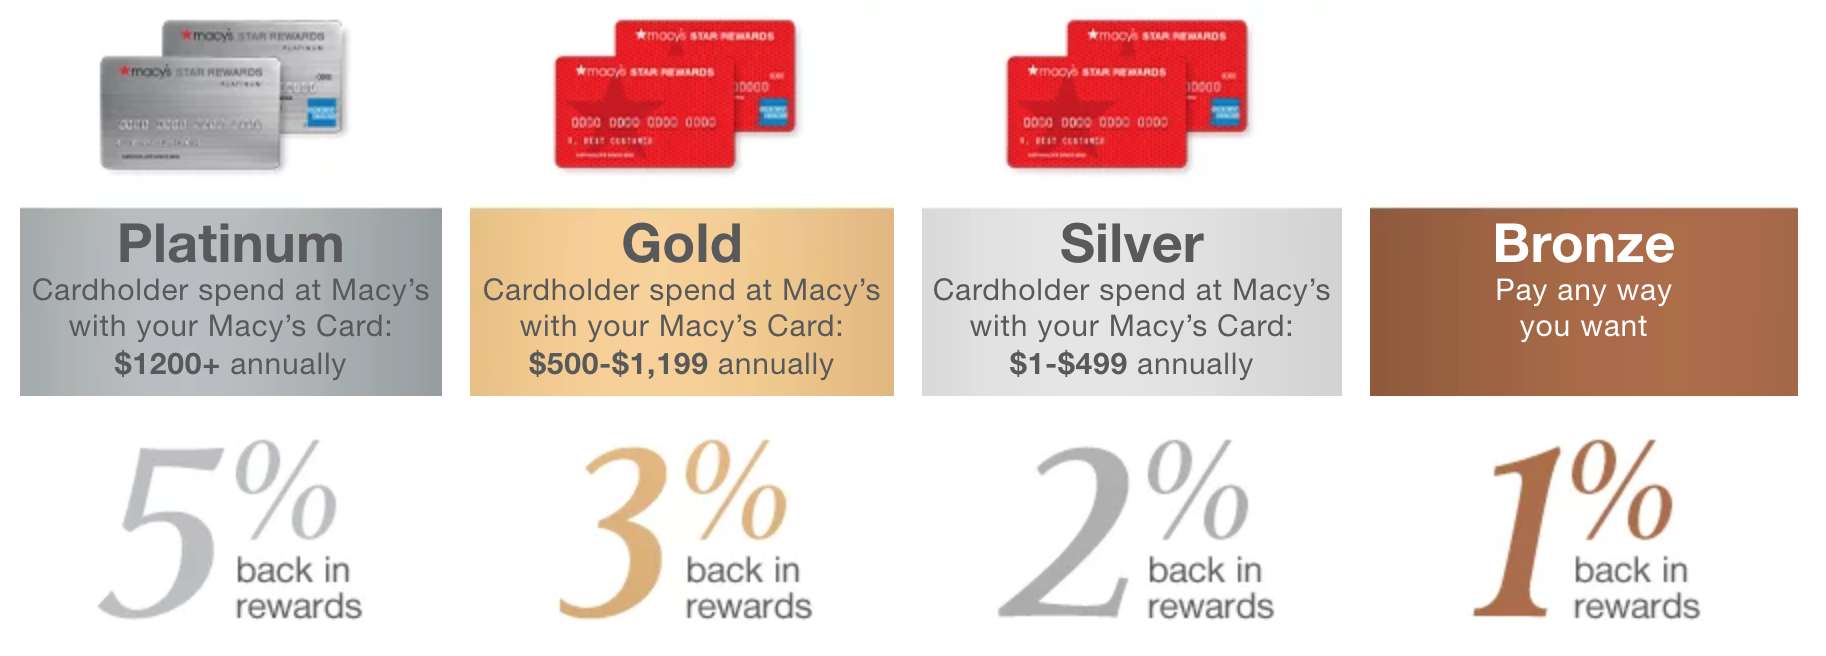 macy's rewards tiers